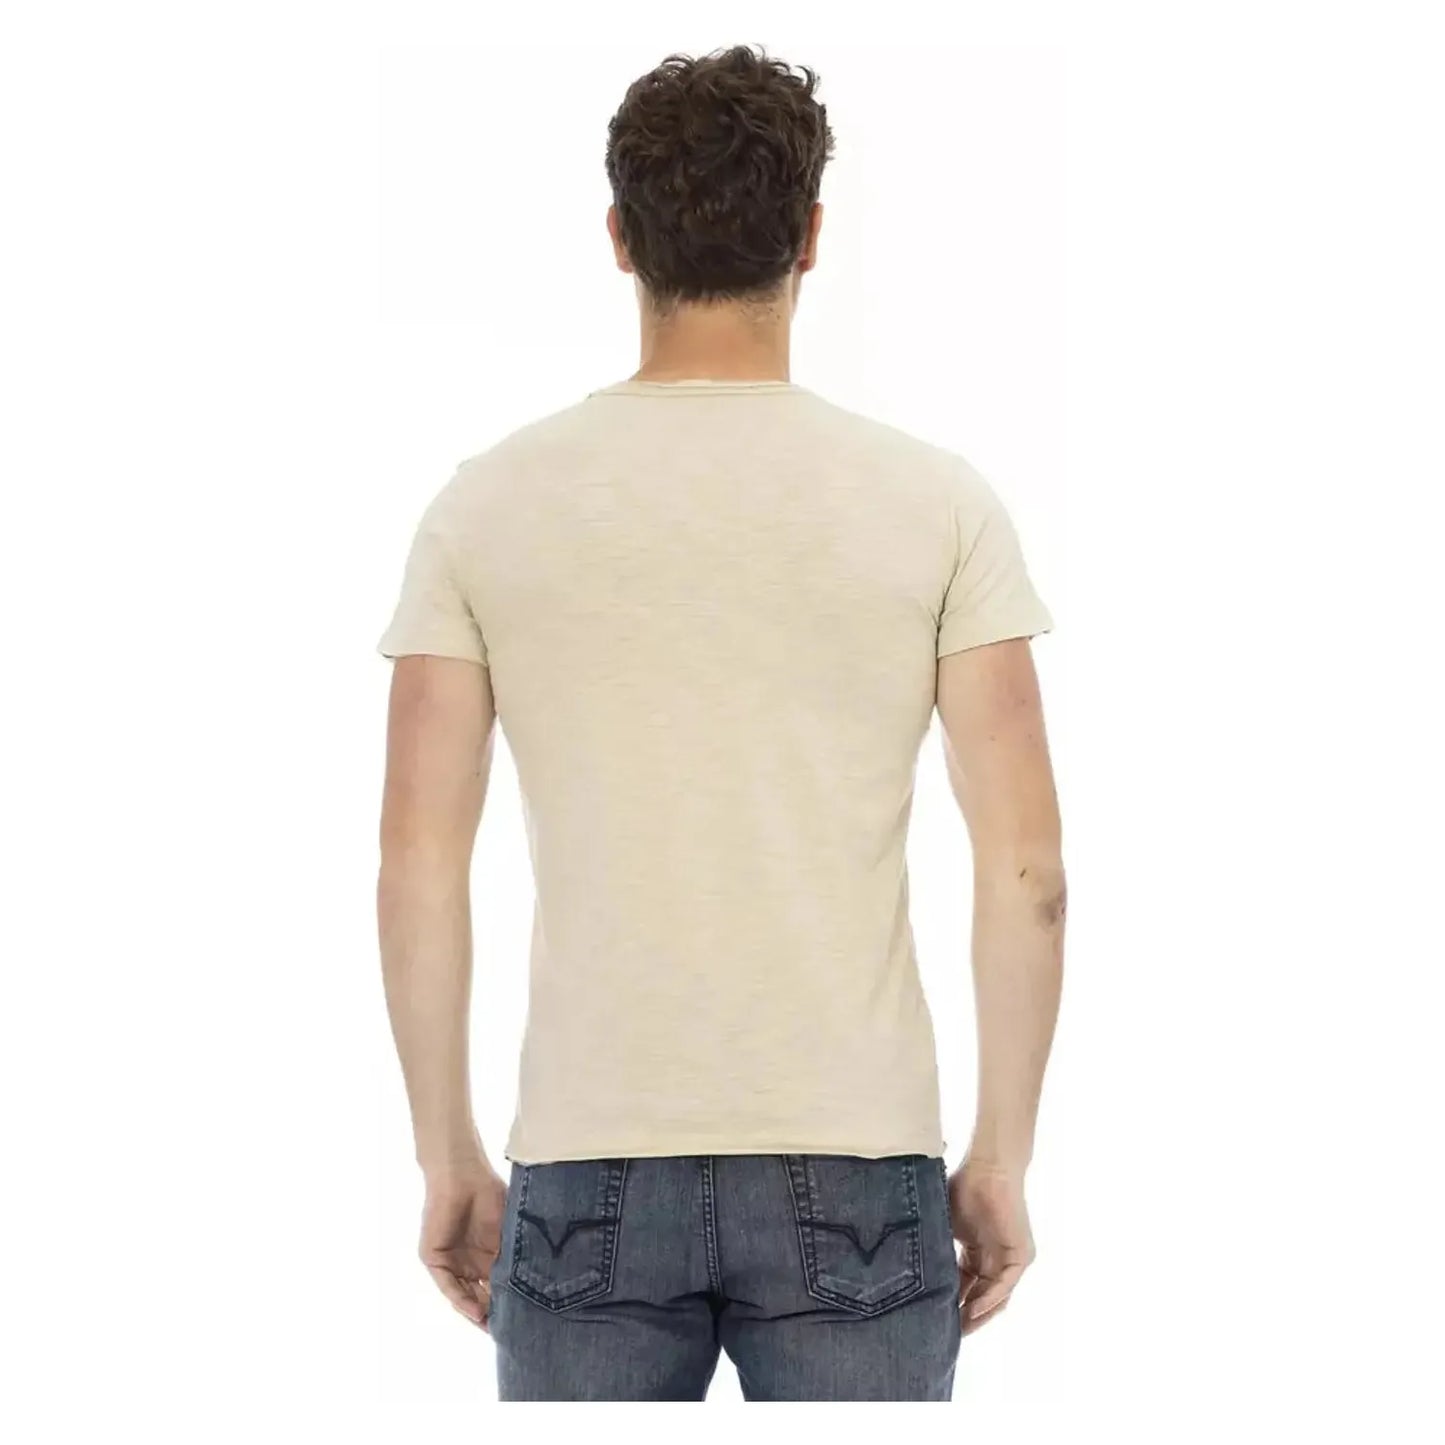 Trussardi Action Beige Short Sleeve Cotton Blend T-Shirt beige-cotton-t-shirt-26